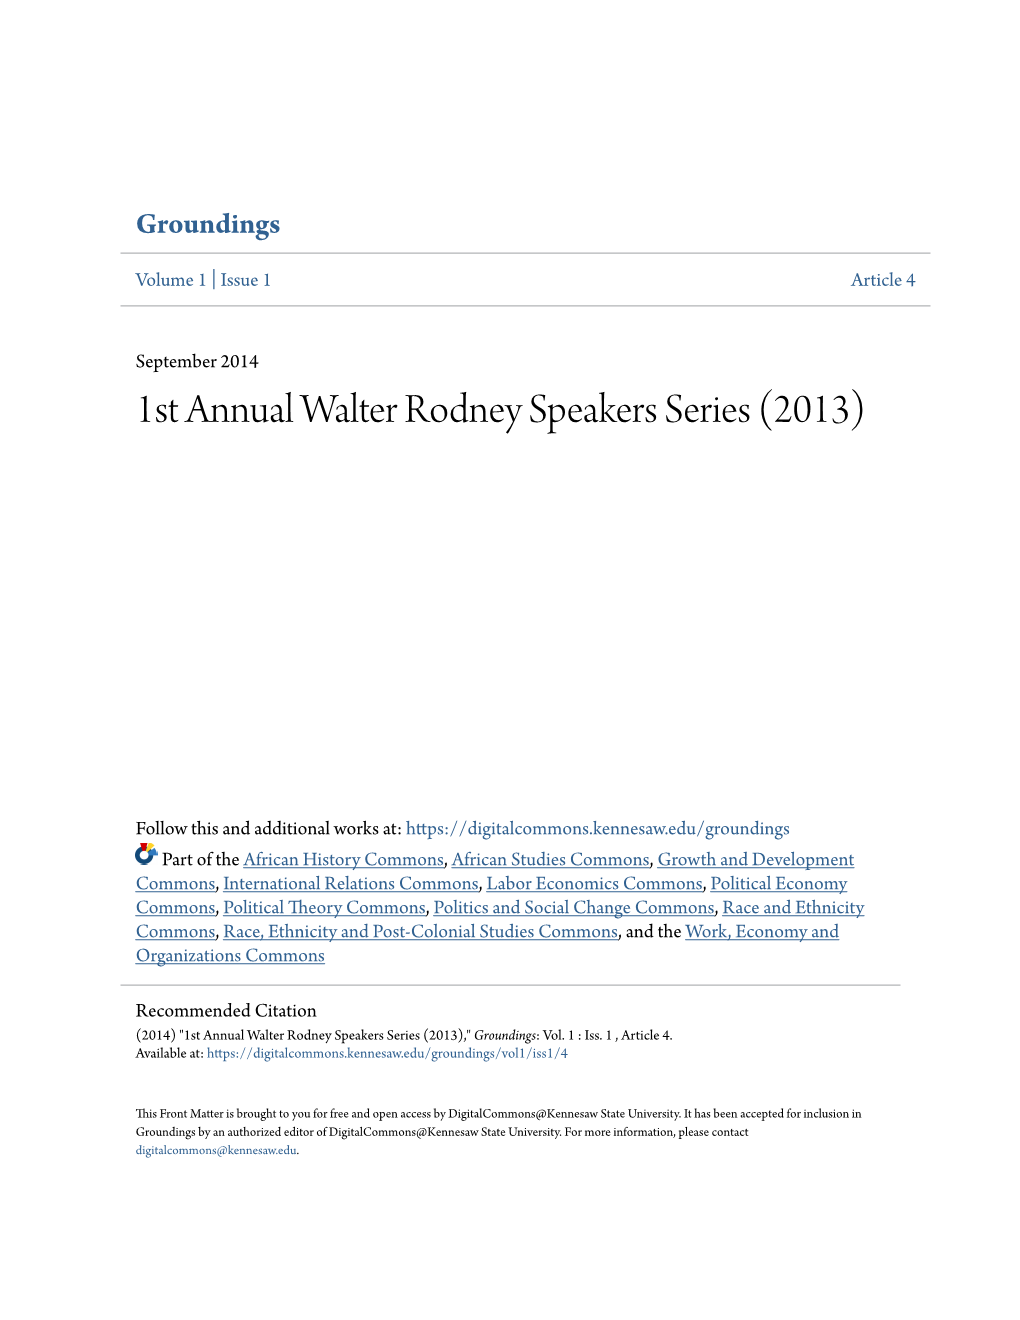 1St Annual Walter Rodney Speakers Series (2013)